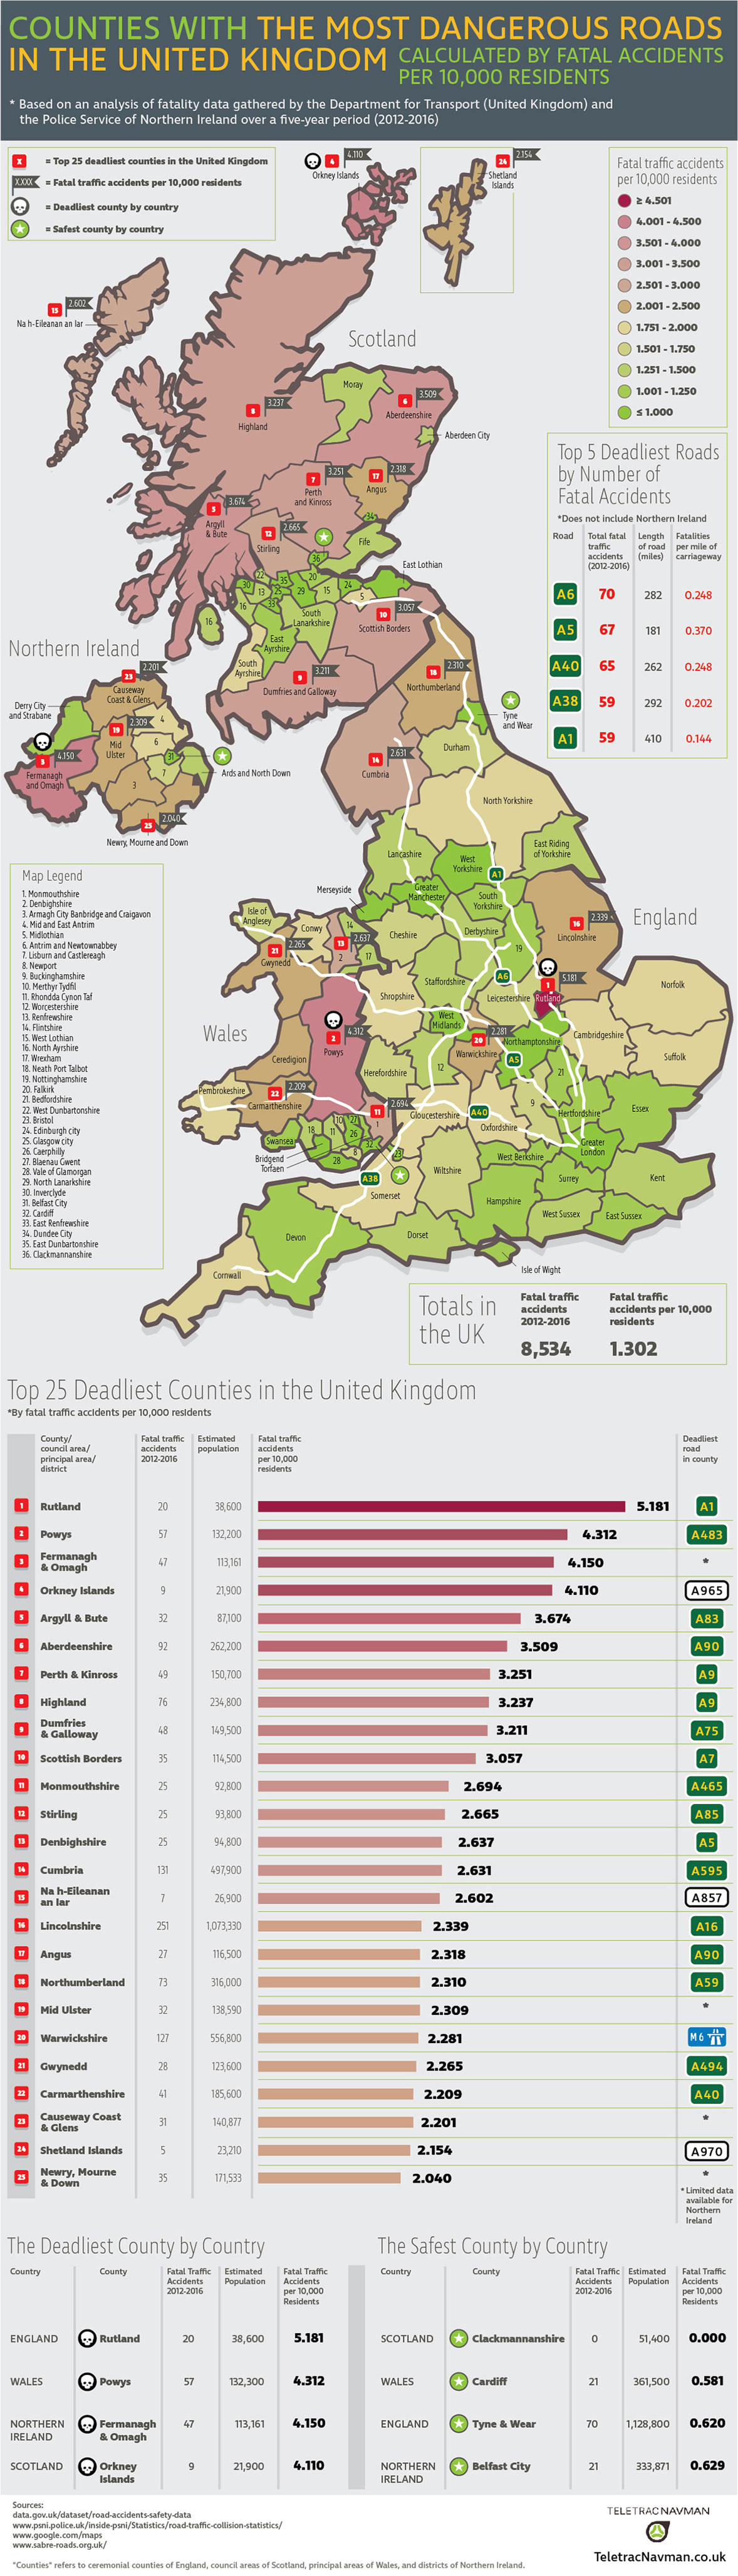 Most Dangerous Roads in the United Kingdom - TeletracNavman.com Infographic